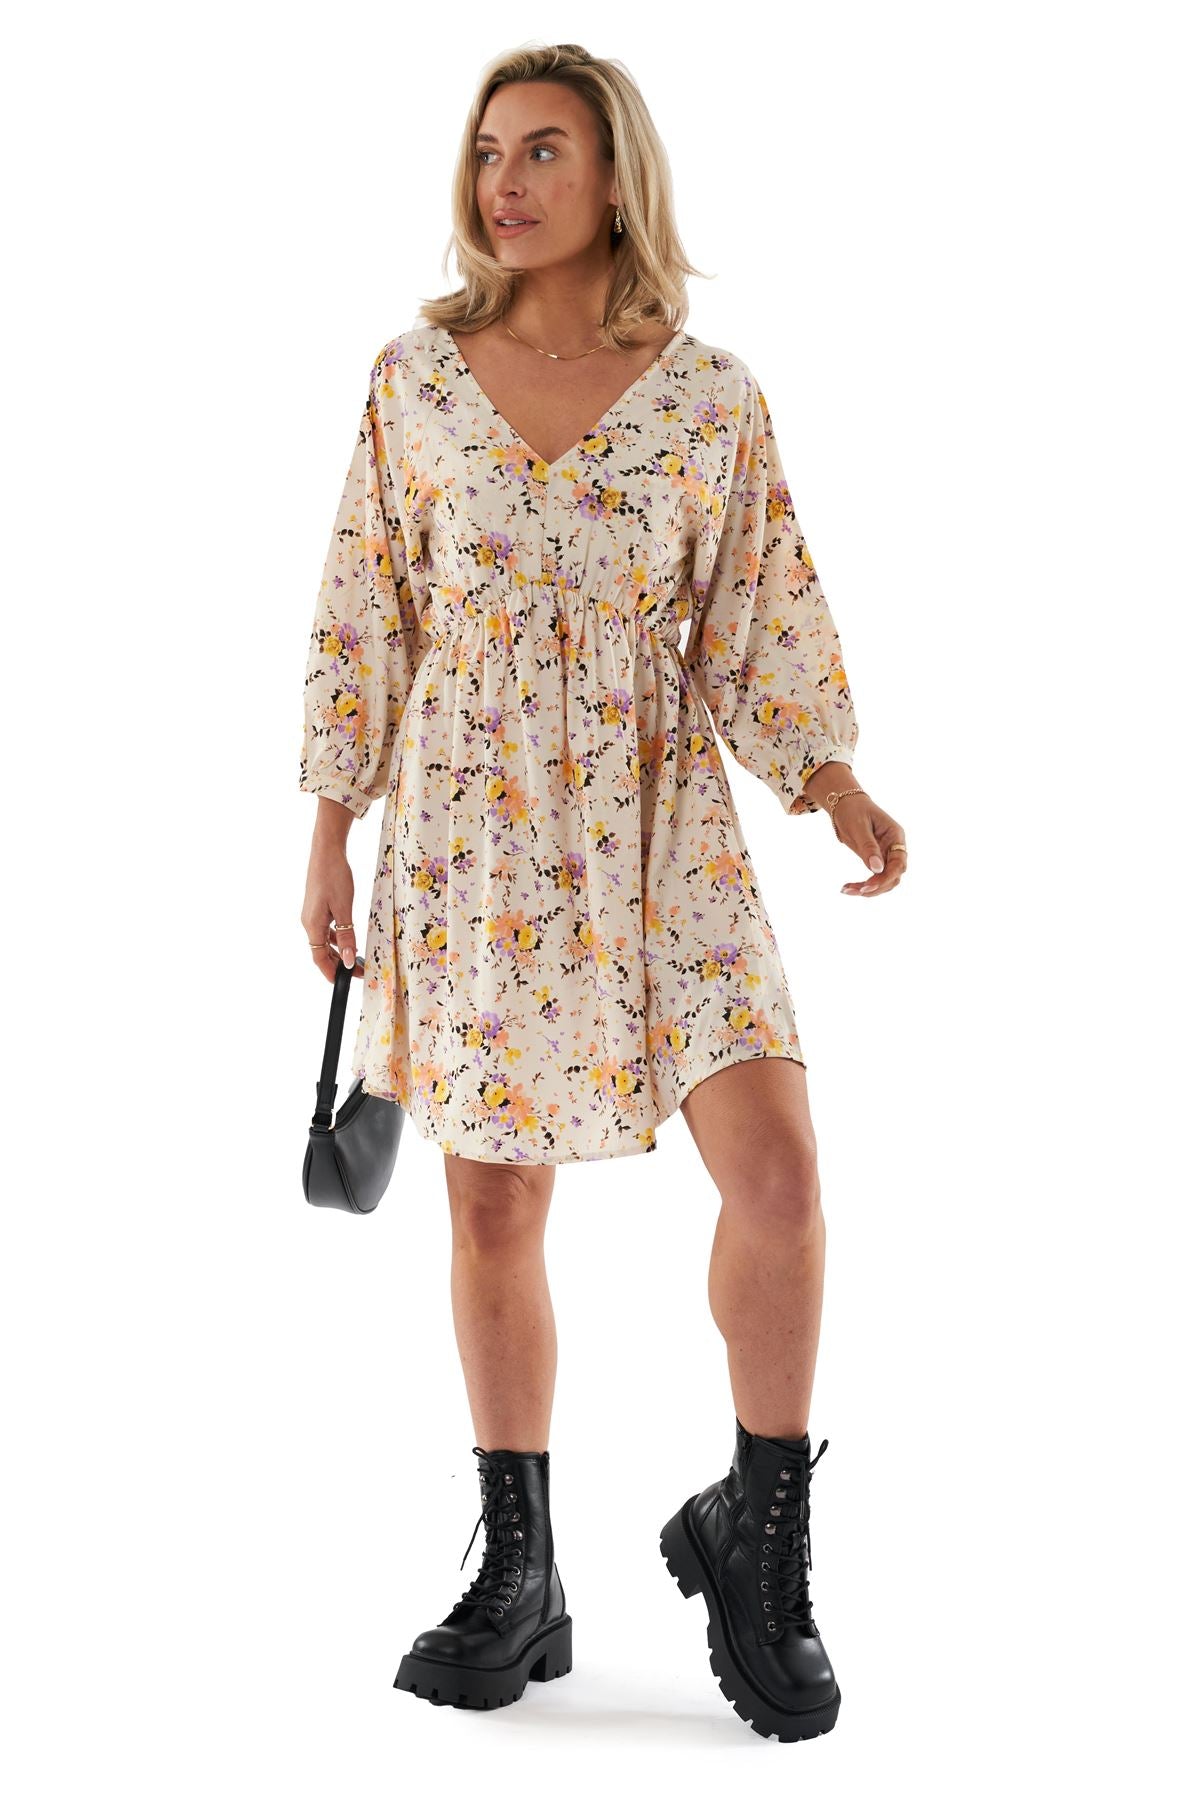 Hooch Womens Designer Summer Mini Dress Floral 3/4 Sleeve Ladies Sundress